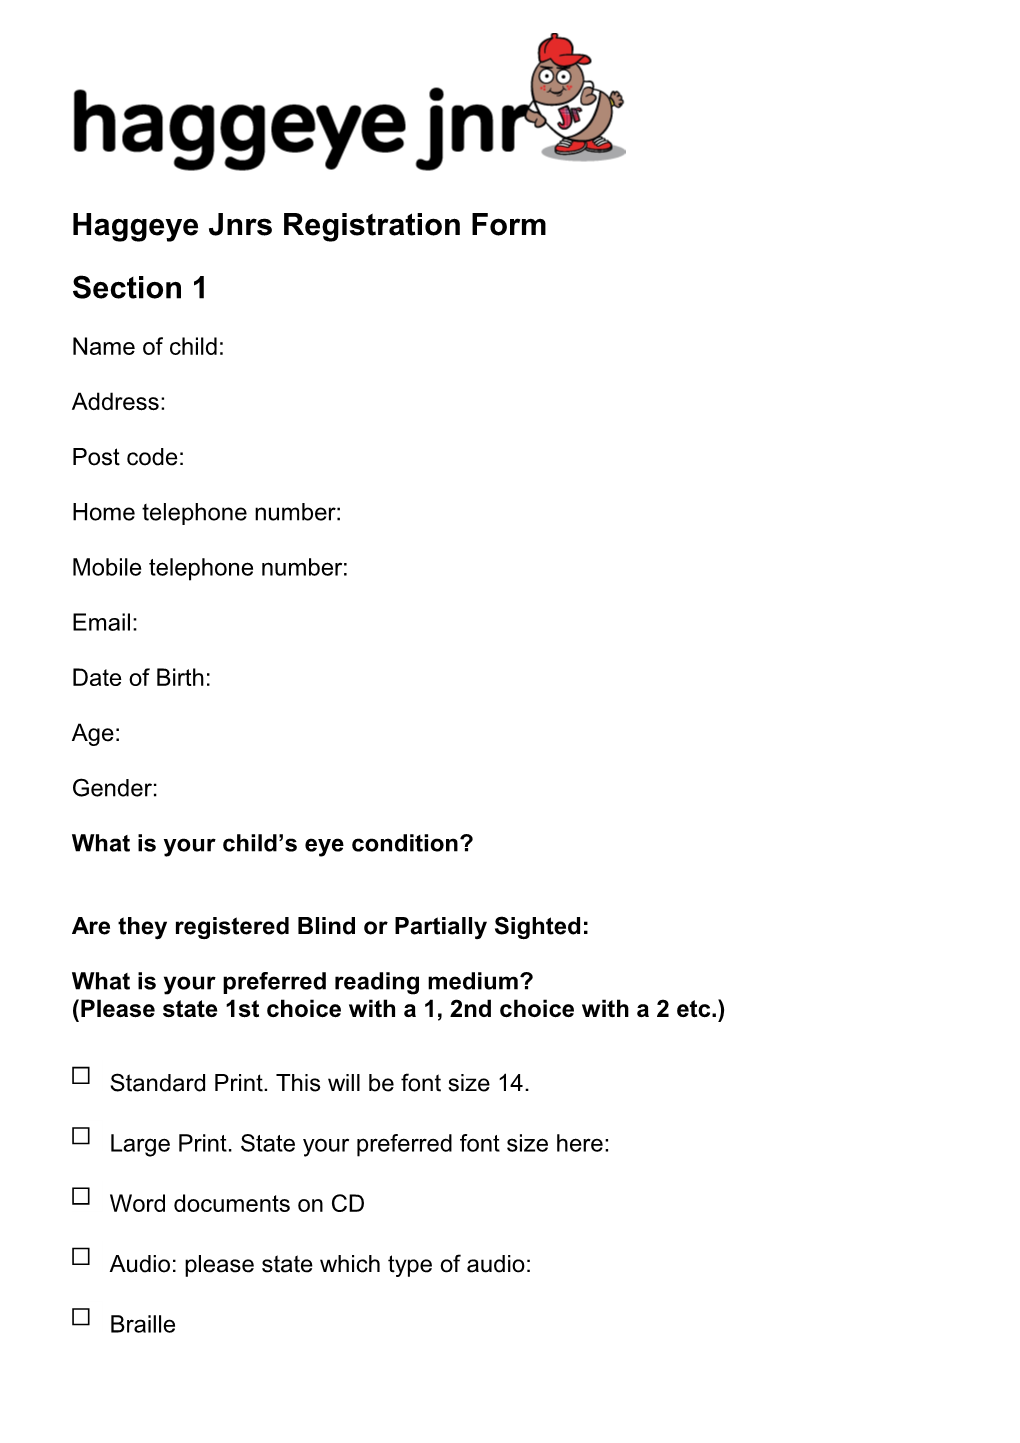 Haggeye Jnrs Registration Form